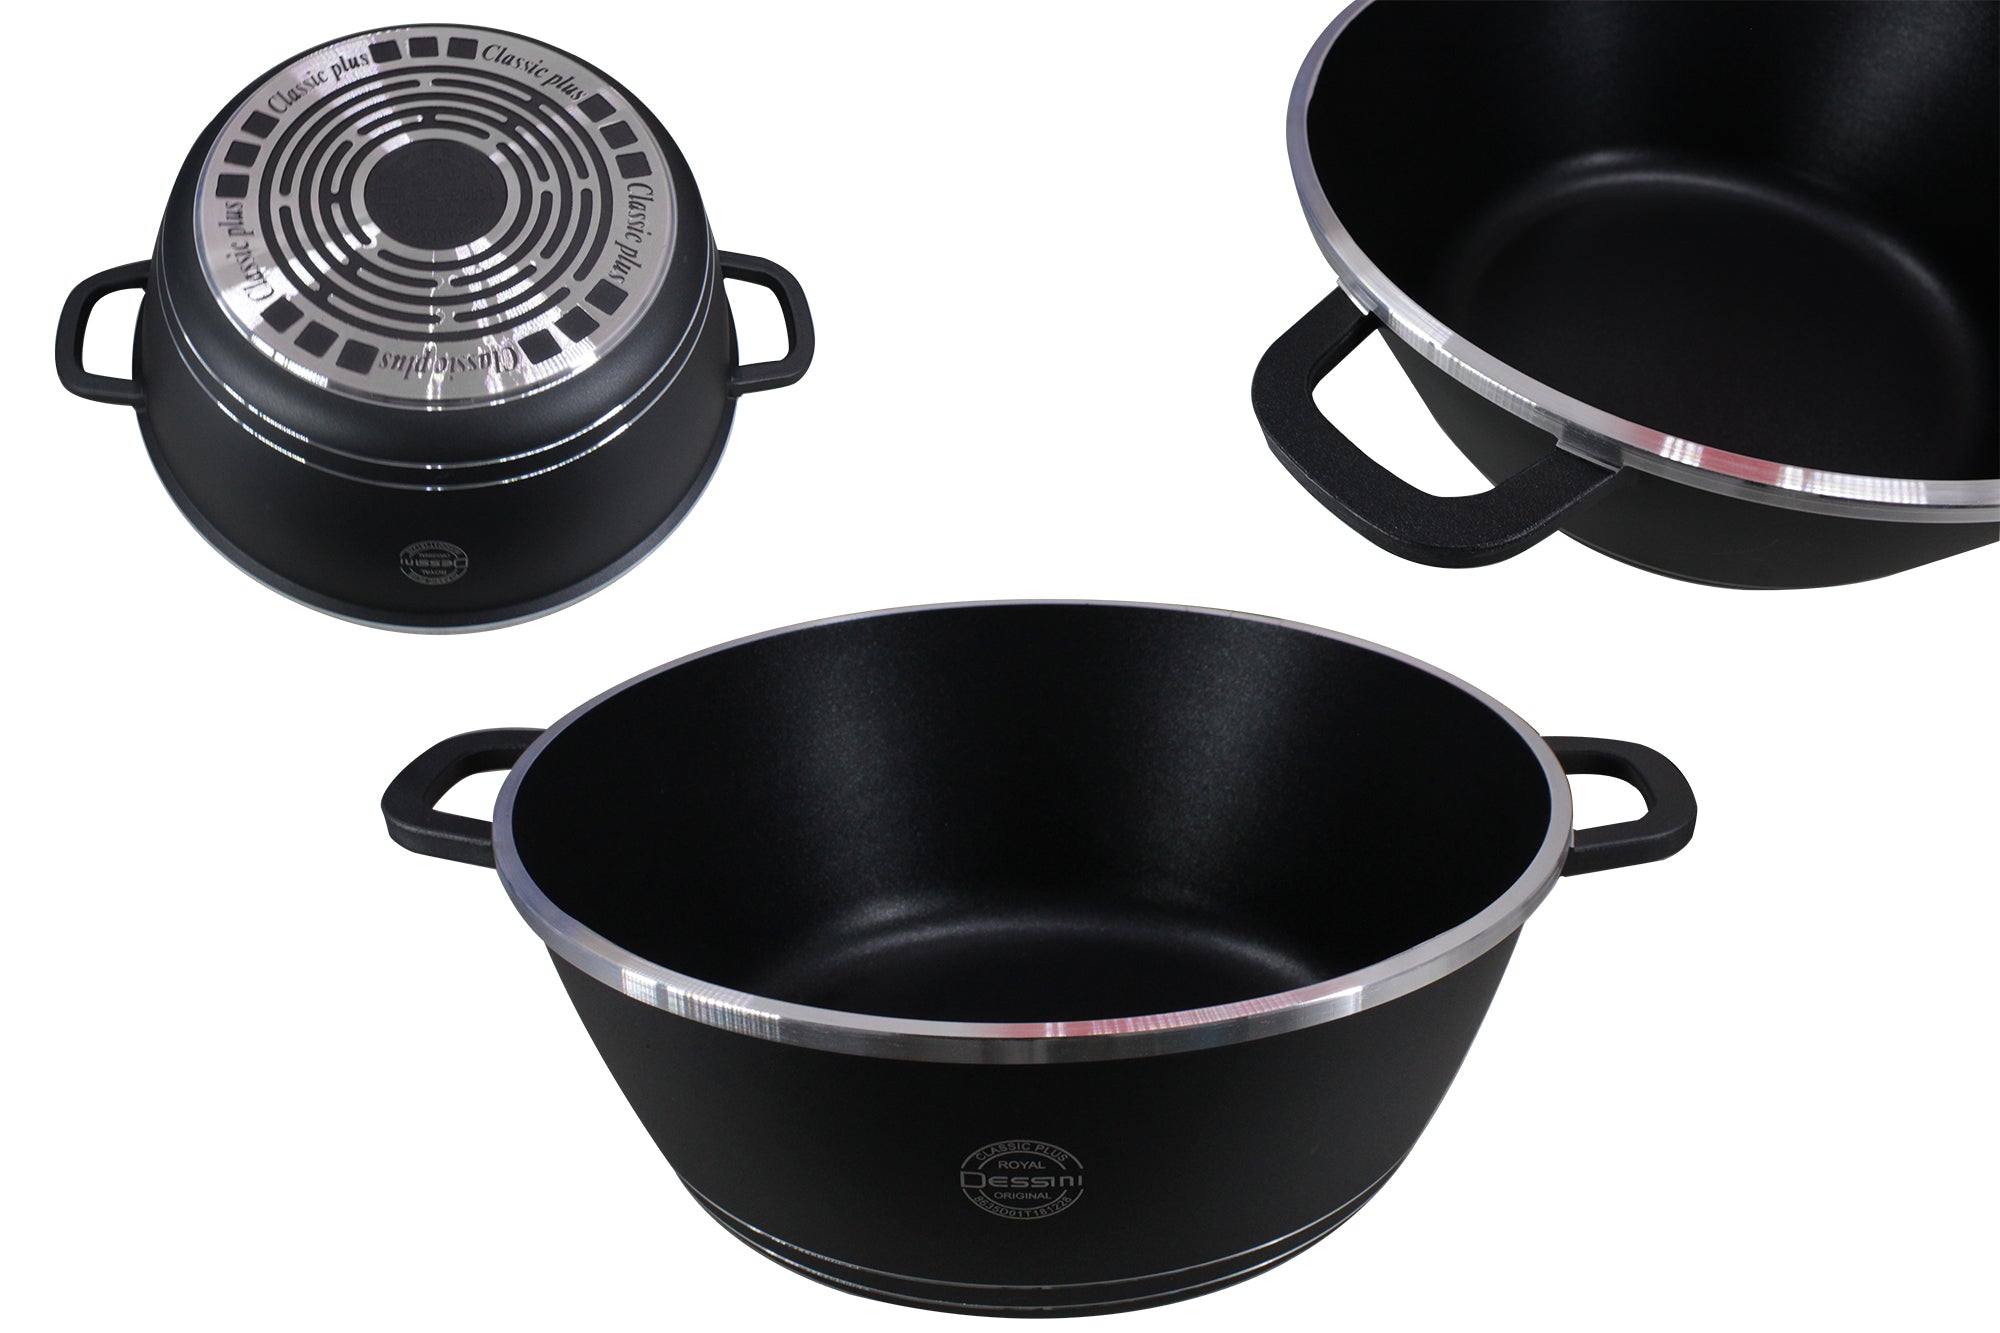 Dessini Die Cast Aluminum Non-Stick Cookware Set with Grill Pan - 23 Piece